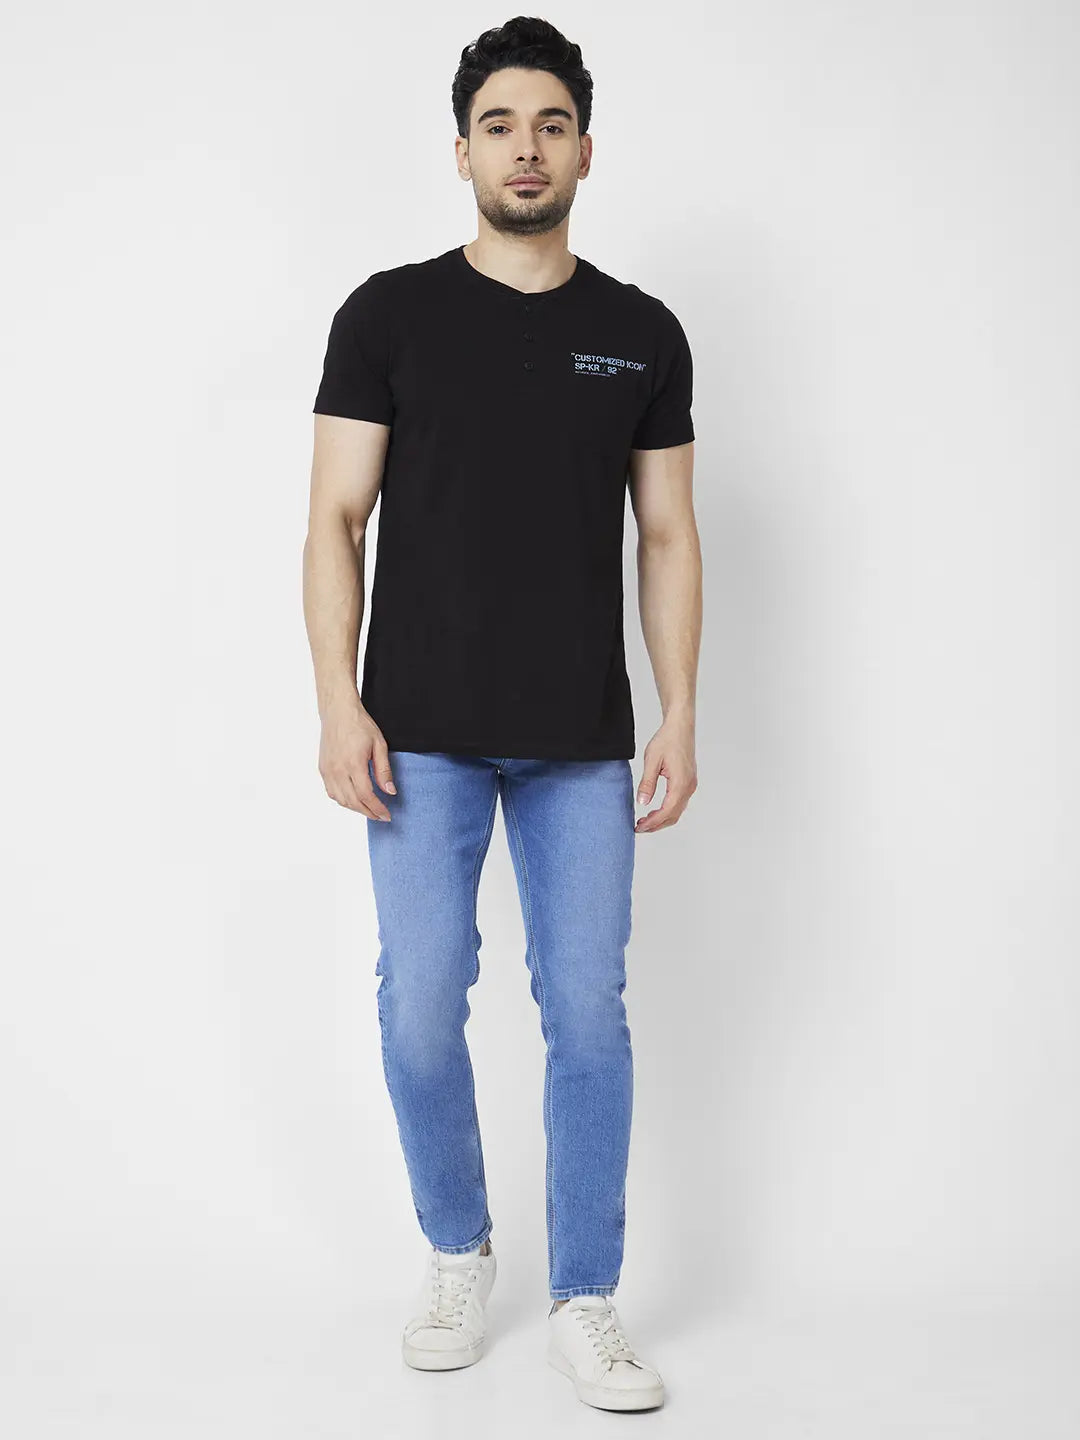 Men's Black Crew-neck T-shirt, Blue Jeans, Black Leather Tassel Loafers |  Lookastic